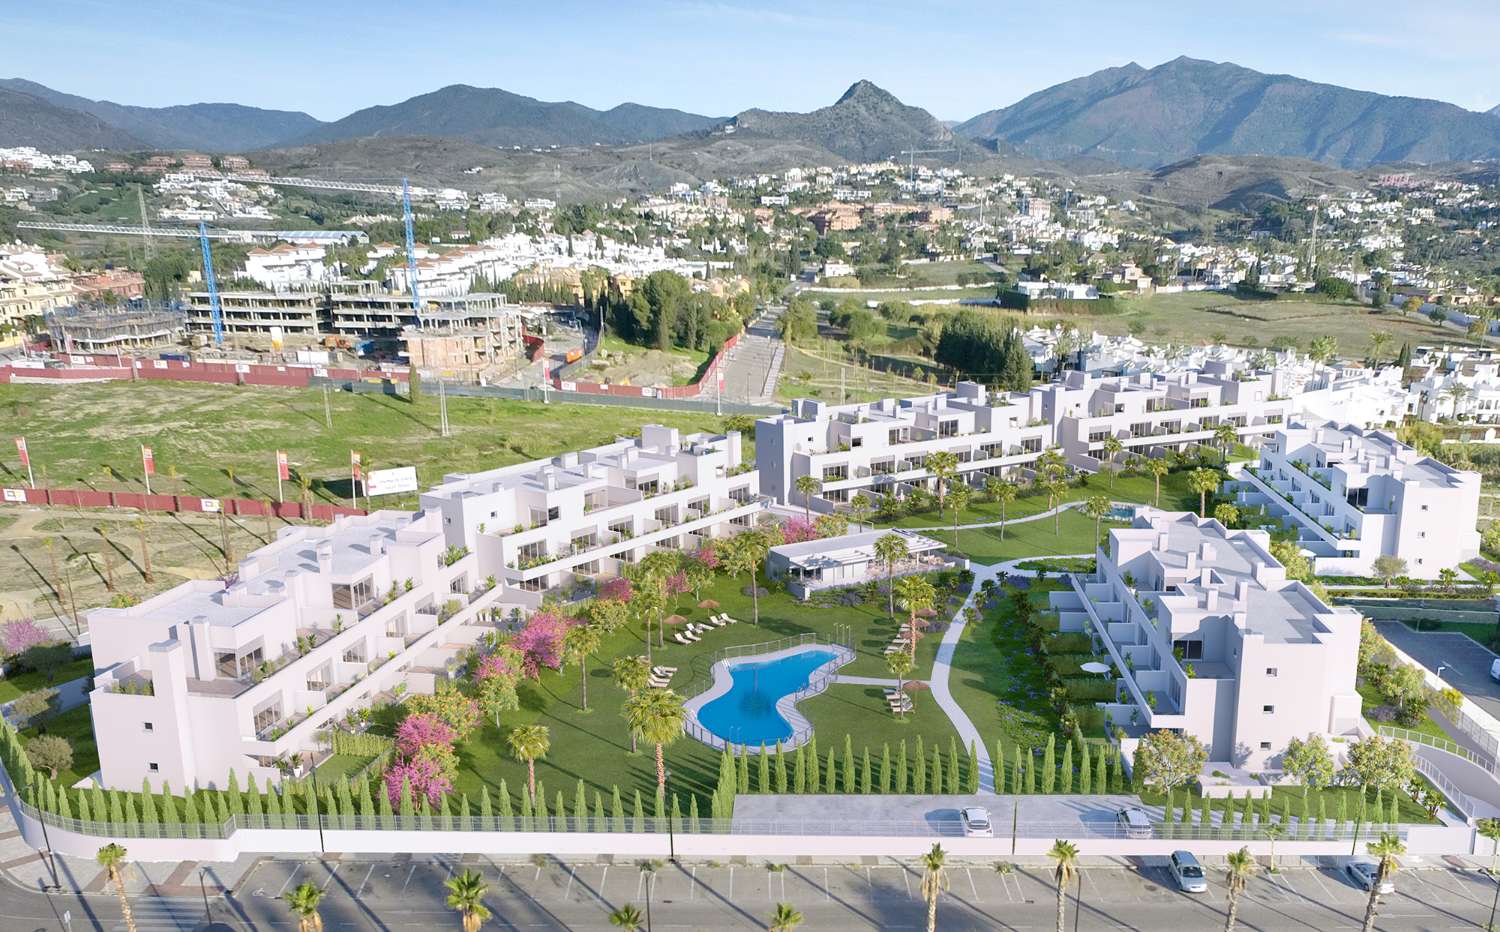 New penthouse in Estepona - Costa del Sol